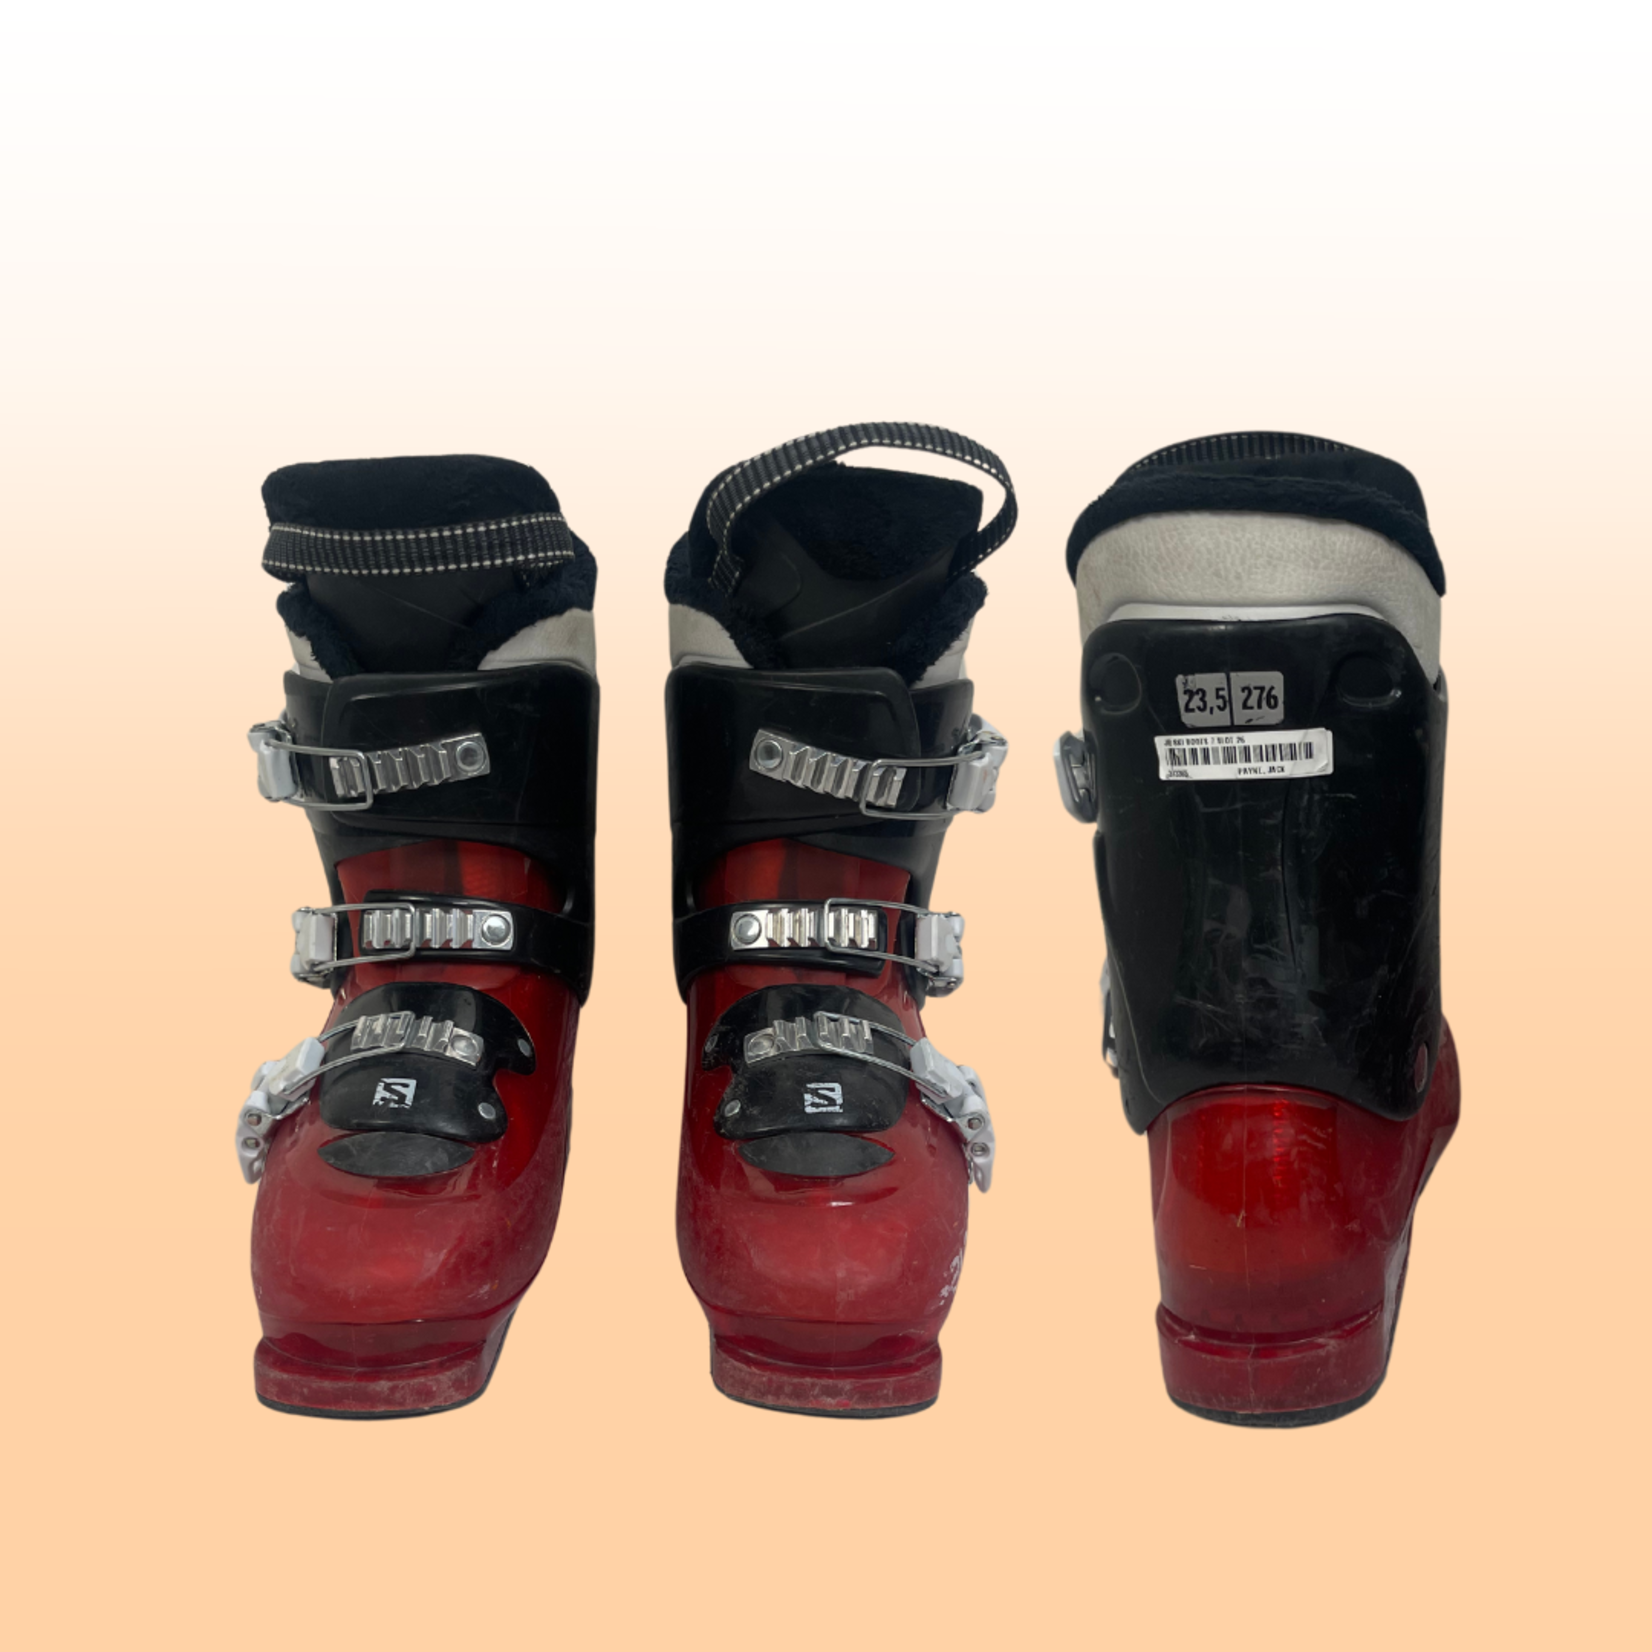 Salomon Salomon T3 Kids Ski Boots, Size 22.5